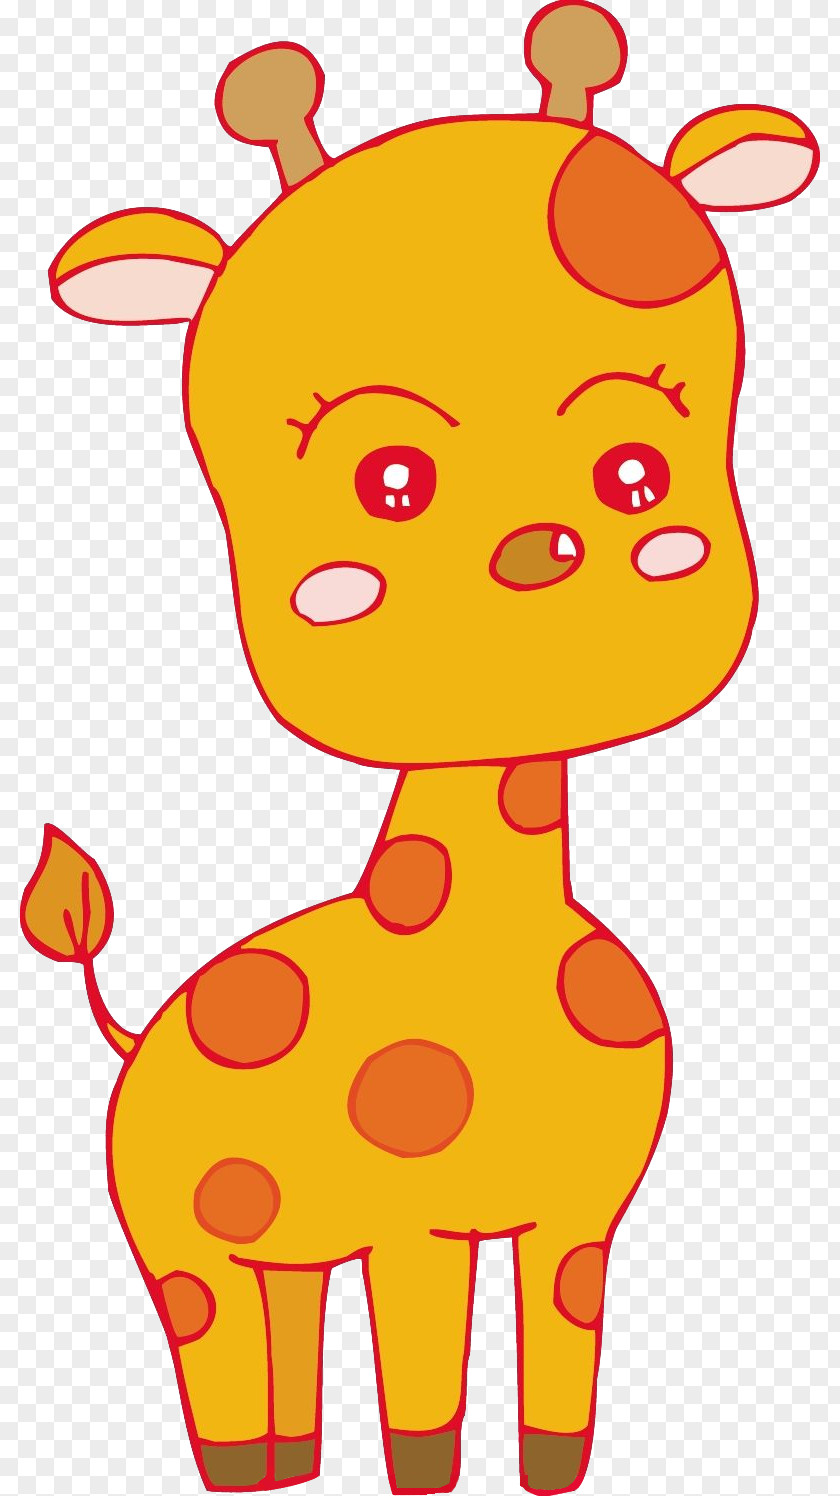 Cute Giraffe Cartoon Illustration PNG